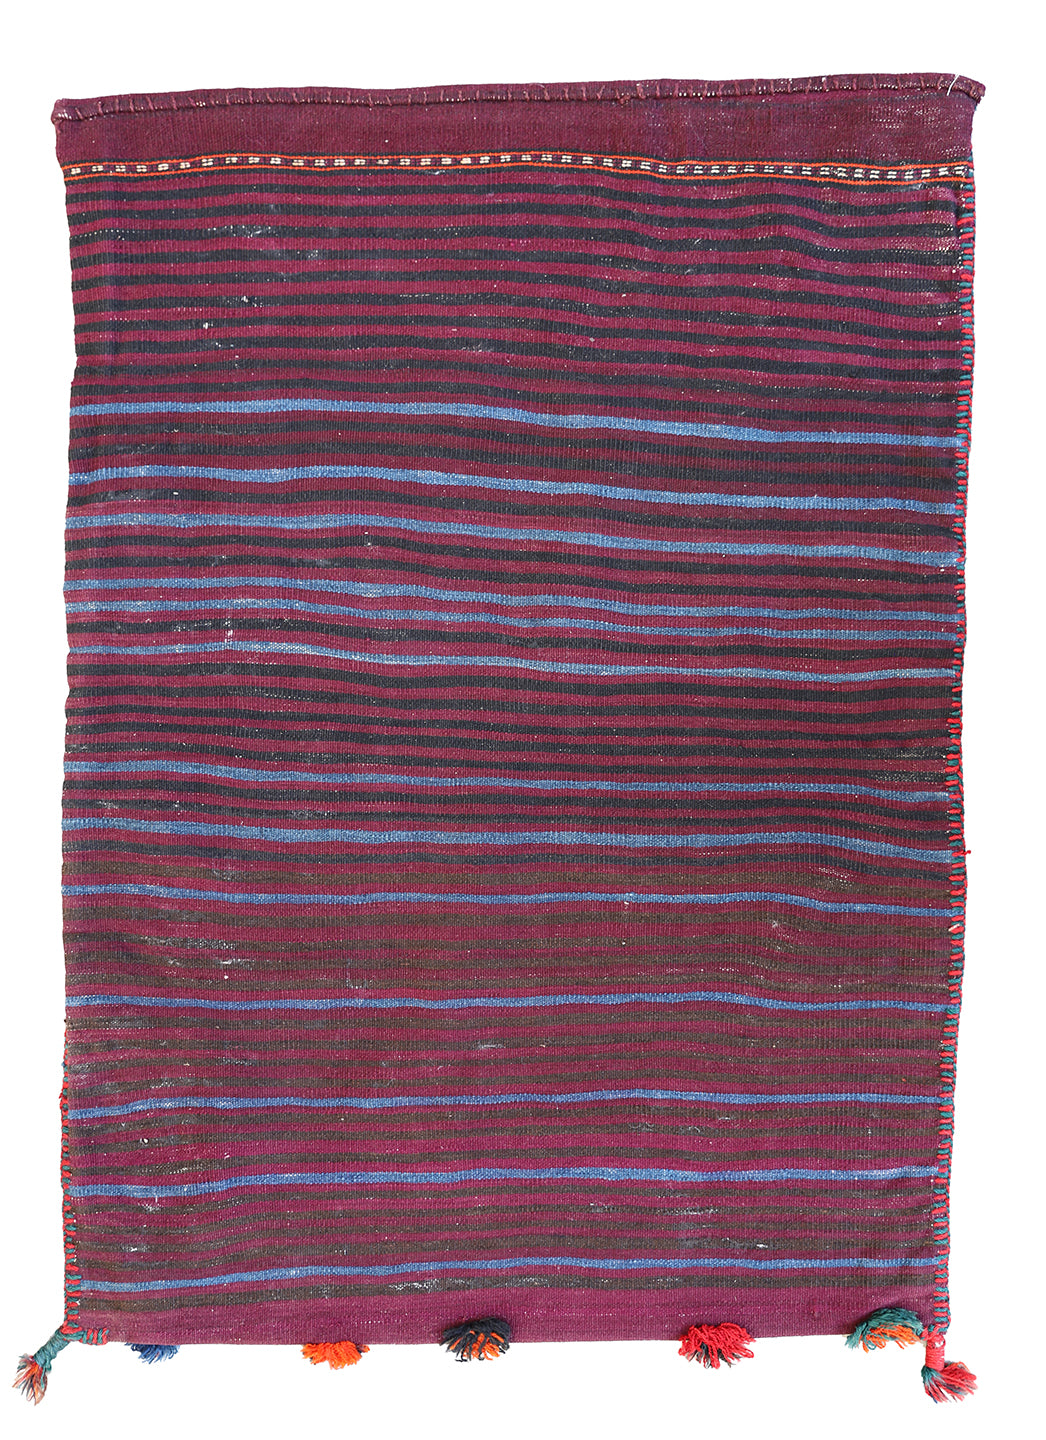 3'x4' Vintage Handwoven Tribal Storage Bag Rug